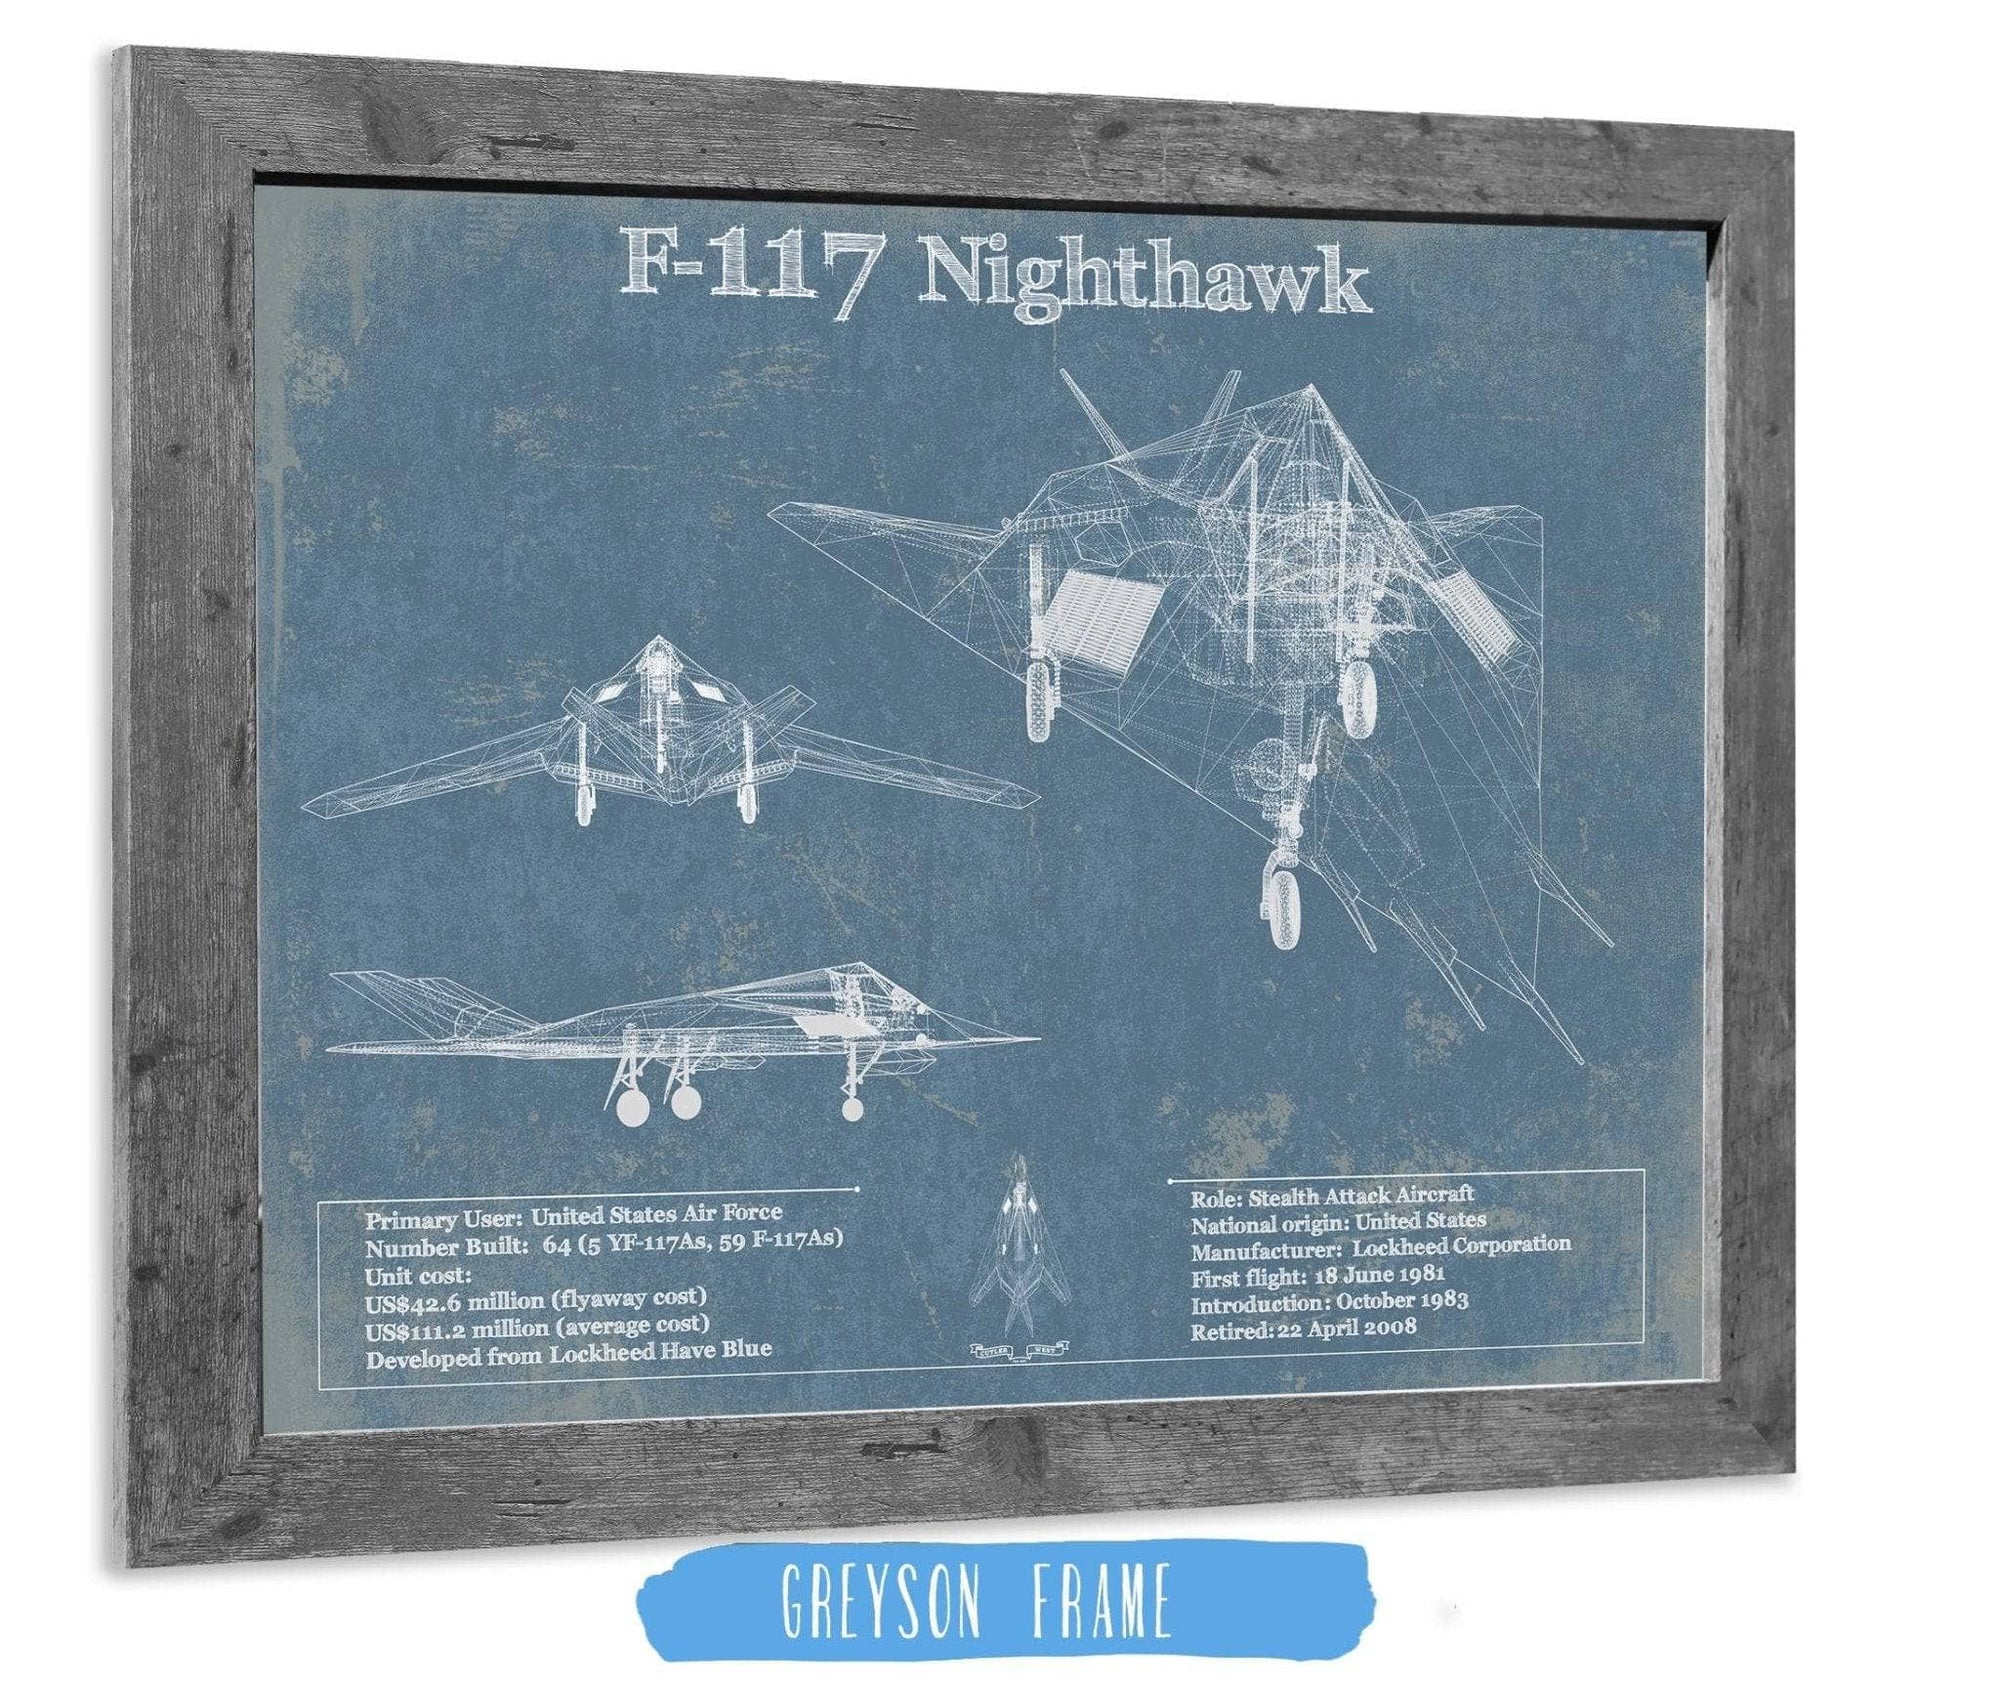 Cutler West Military Aircraft 14" x 11" / Greyson Frame F-117 Nighthawk Military Aircraft Patent - Blueprint Military Wall Art 766208918_62274